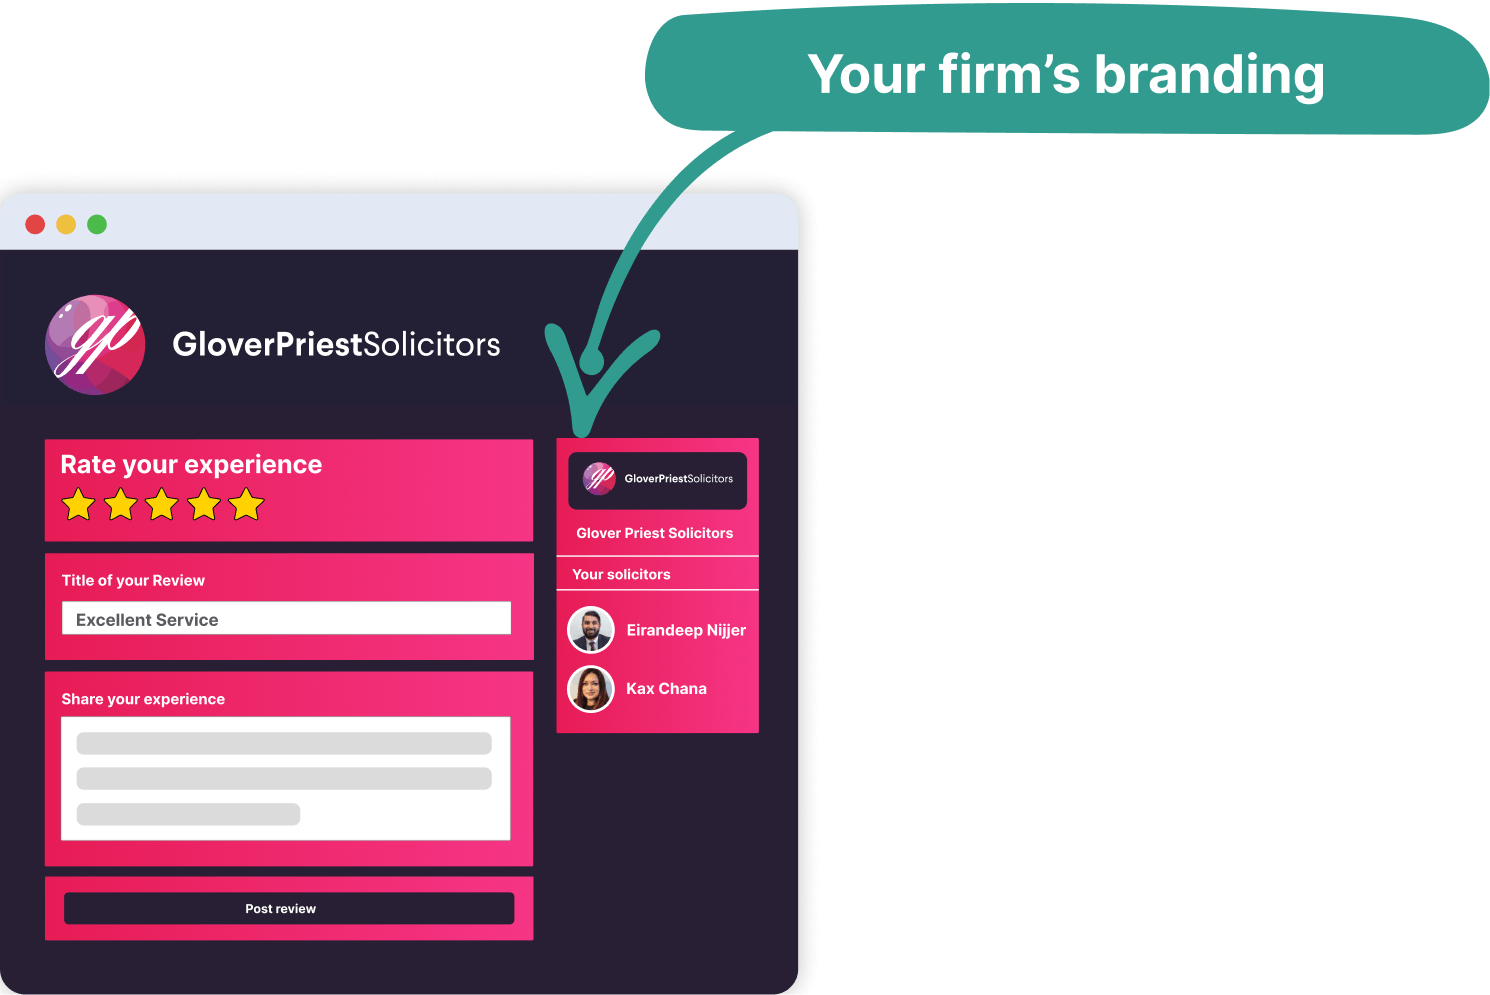 Custom questionnaire - add custom firm branding